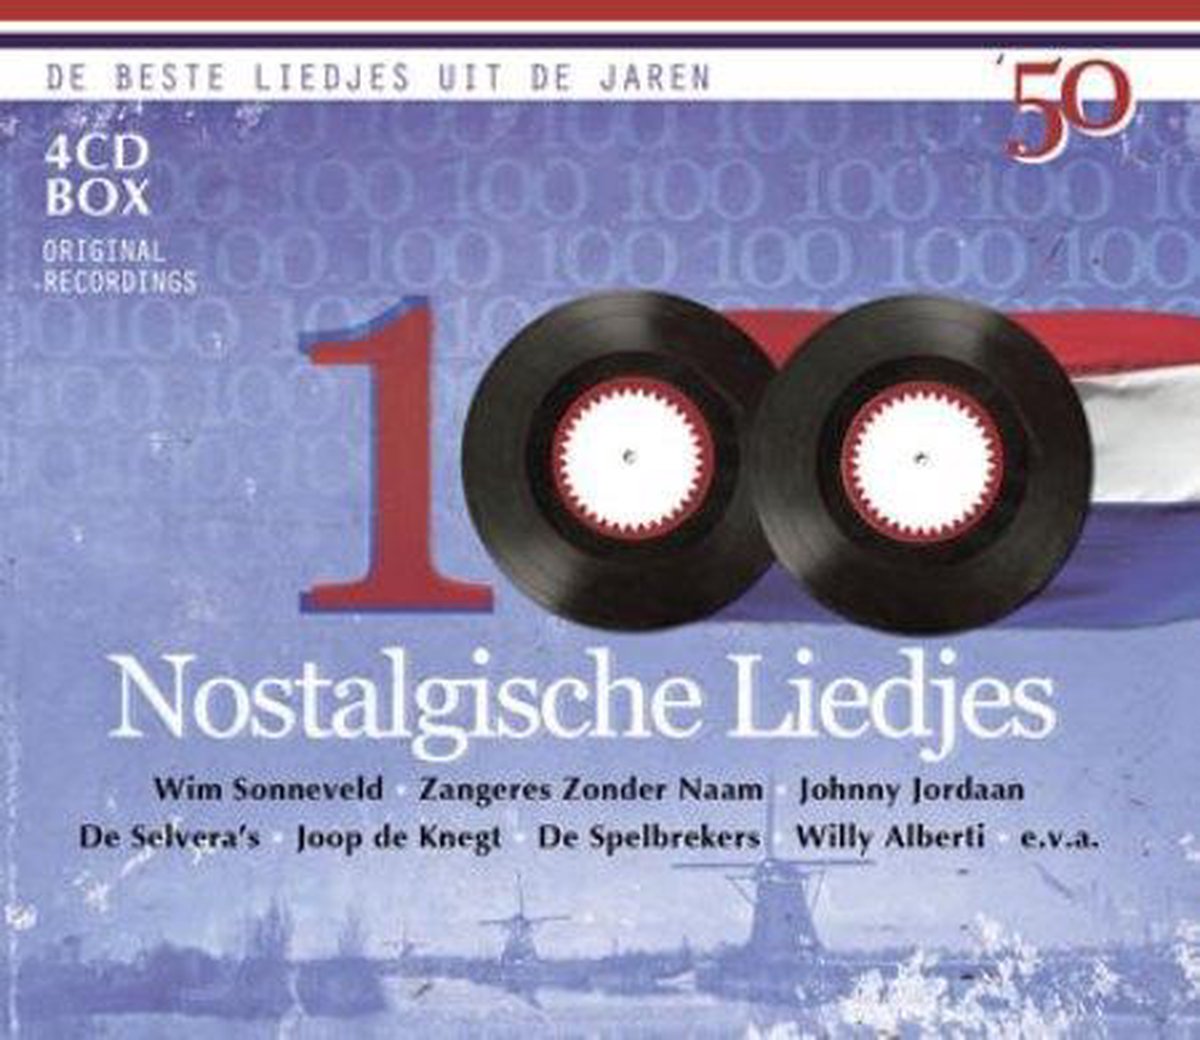 Banzai Bezem werk 100 Hollandse Hits Van Toen, various artists | CD (album) | Muziek | bol.com